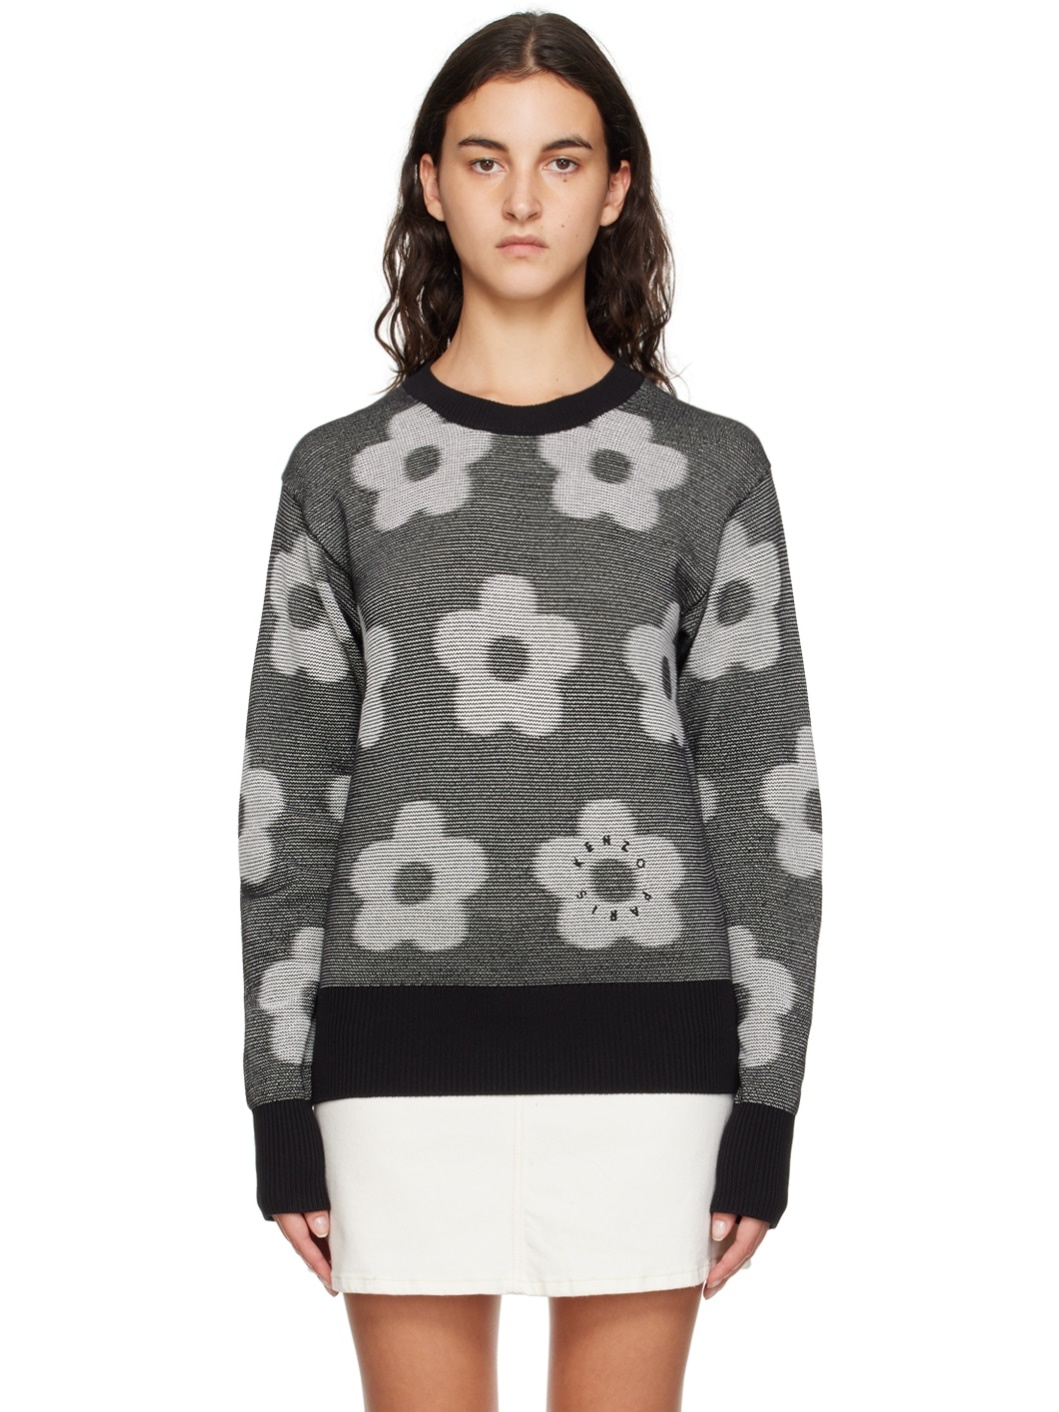 Black & White Kenzo Paris Flower Spot Sweater - 1